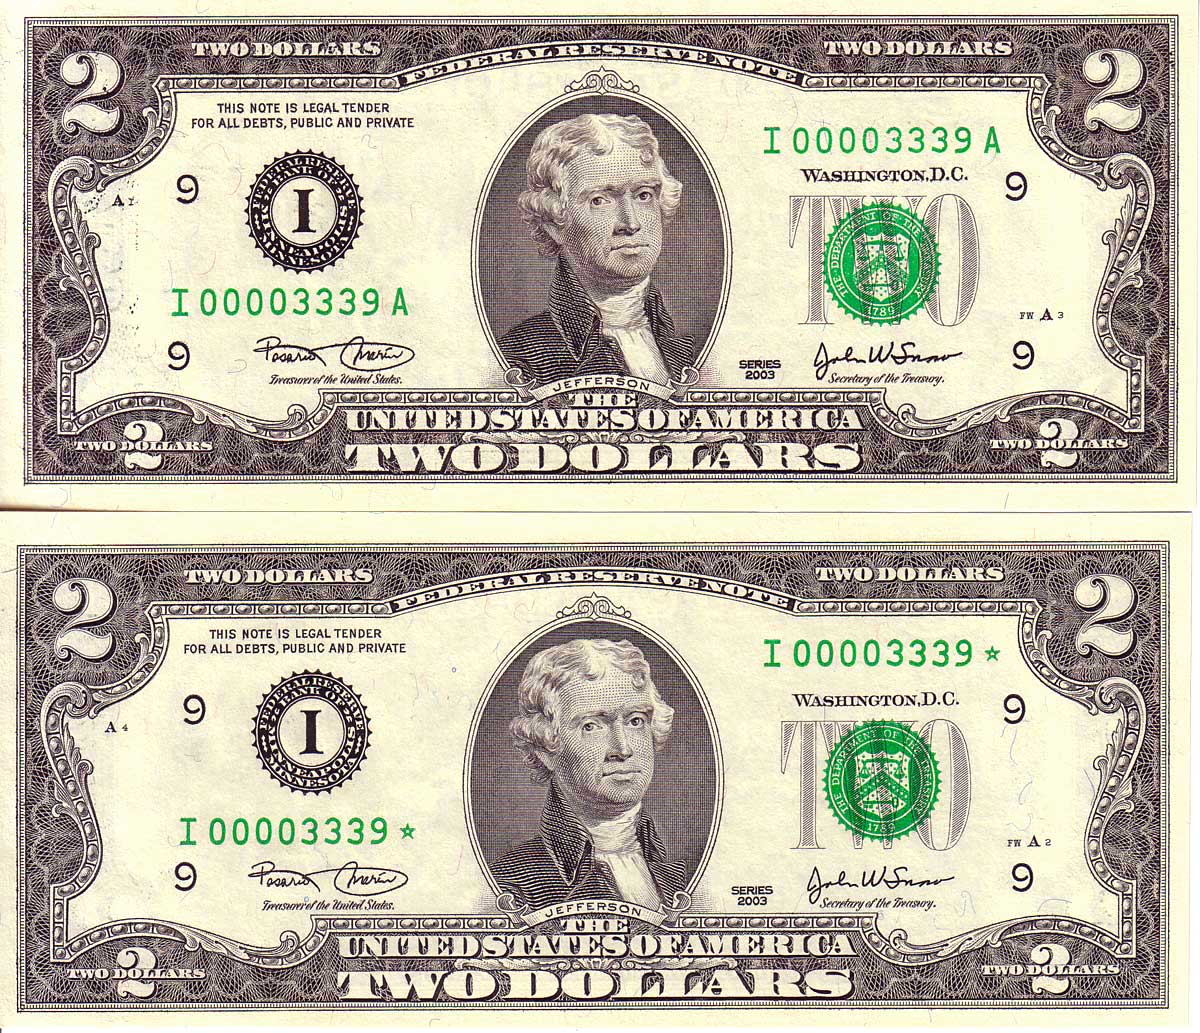 Uncirculated 2003 STAR NOTE $1 Dollar Atlanta,Crisp consecutive 